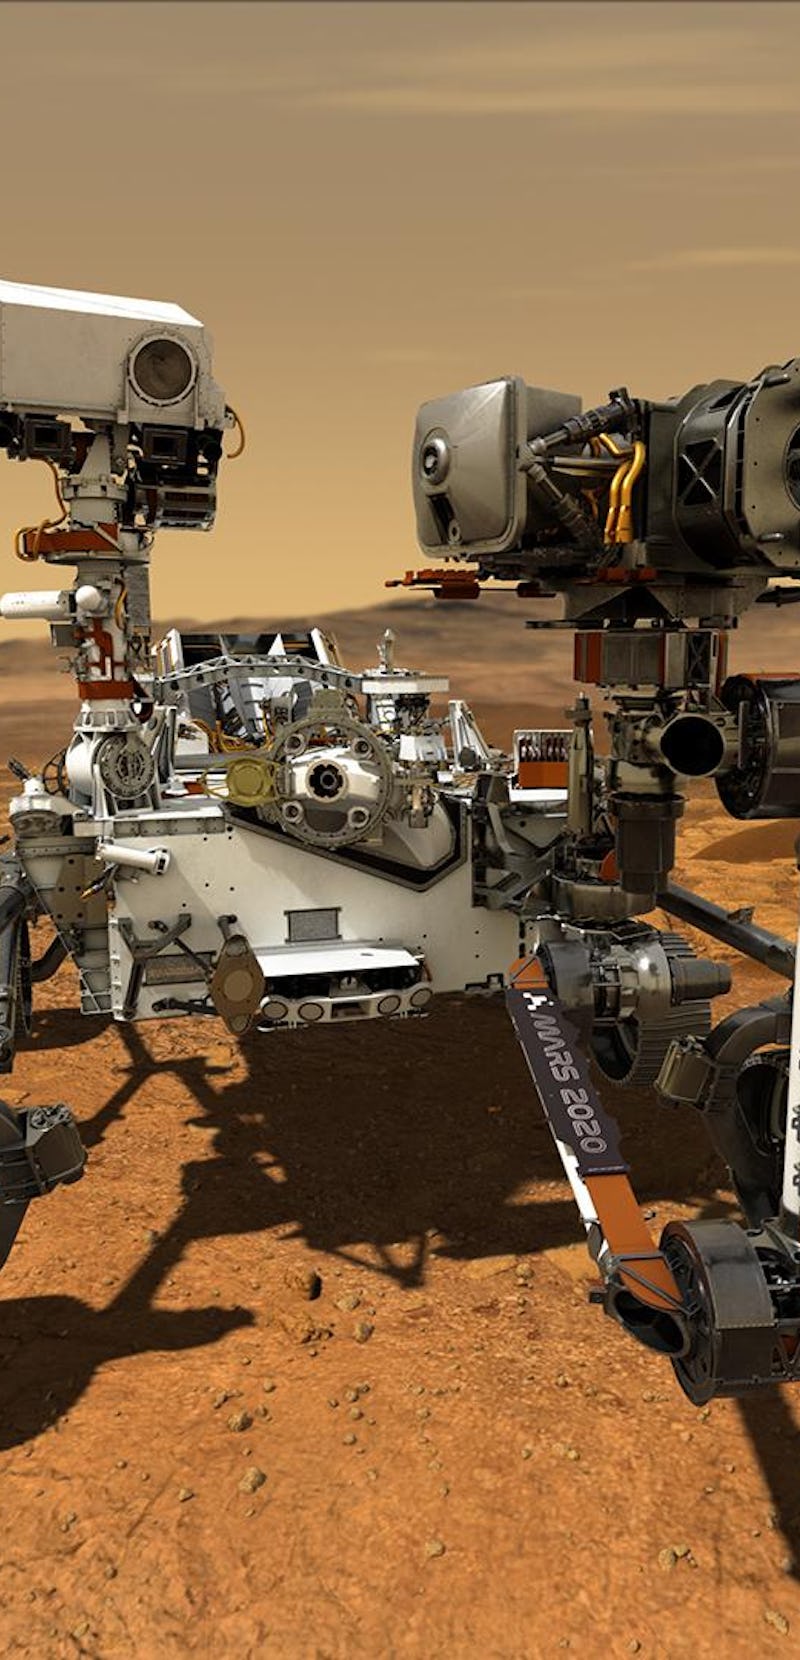 artist's rendering of Perseverance Mars rover